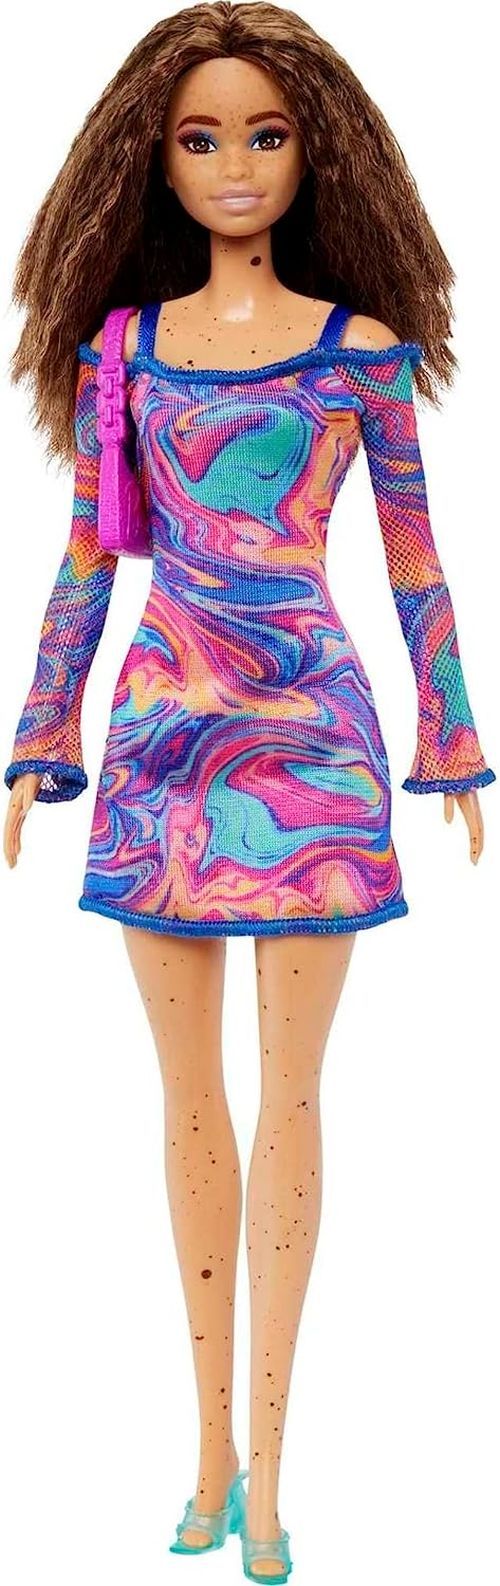 MATTEL Barbie In Swirled Color Dress - DOLLS